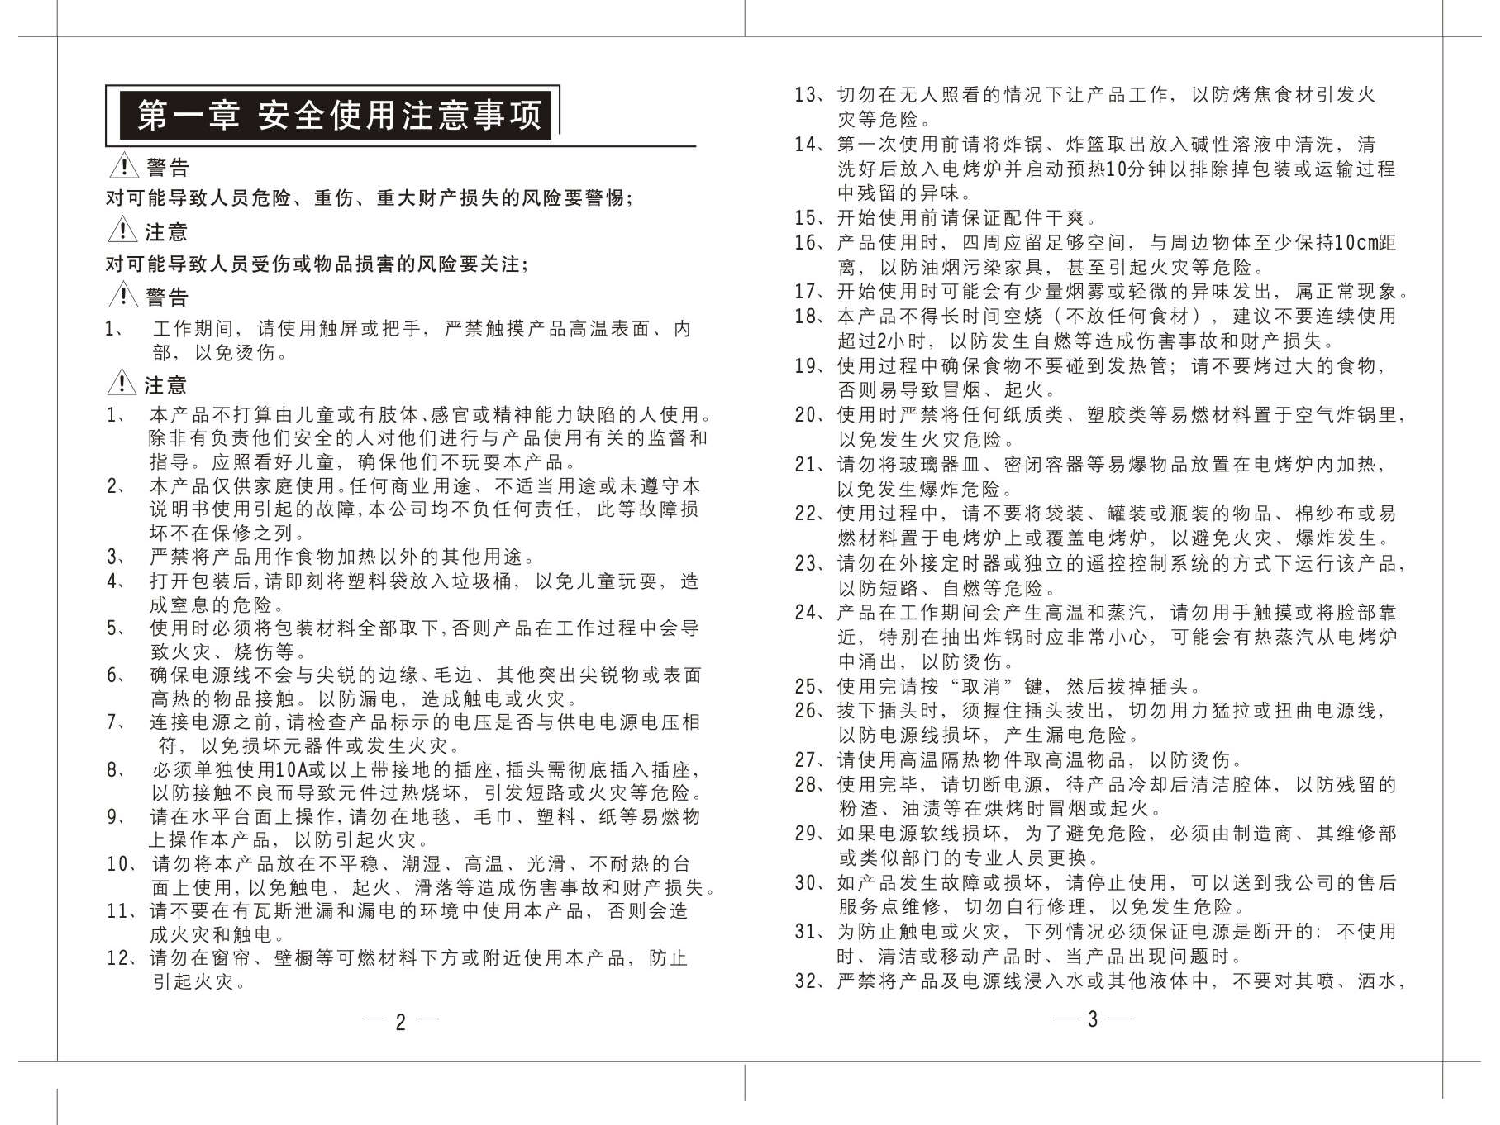 九阳 Joyyoung KL32-S63A 使用说明书 第2页